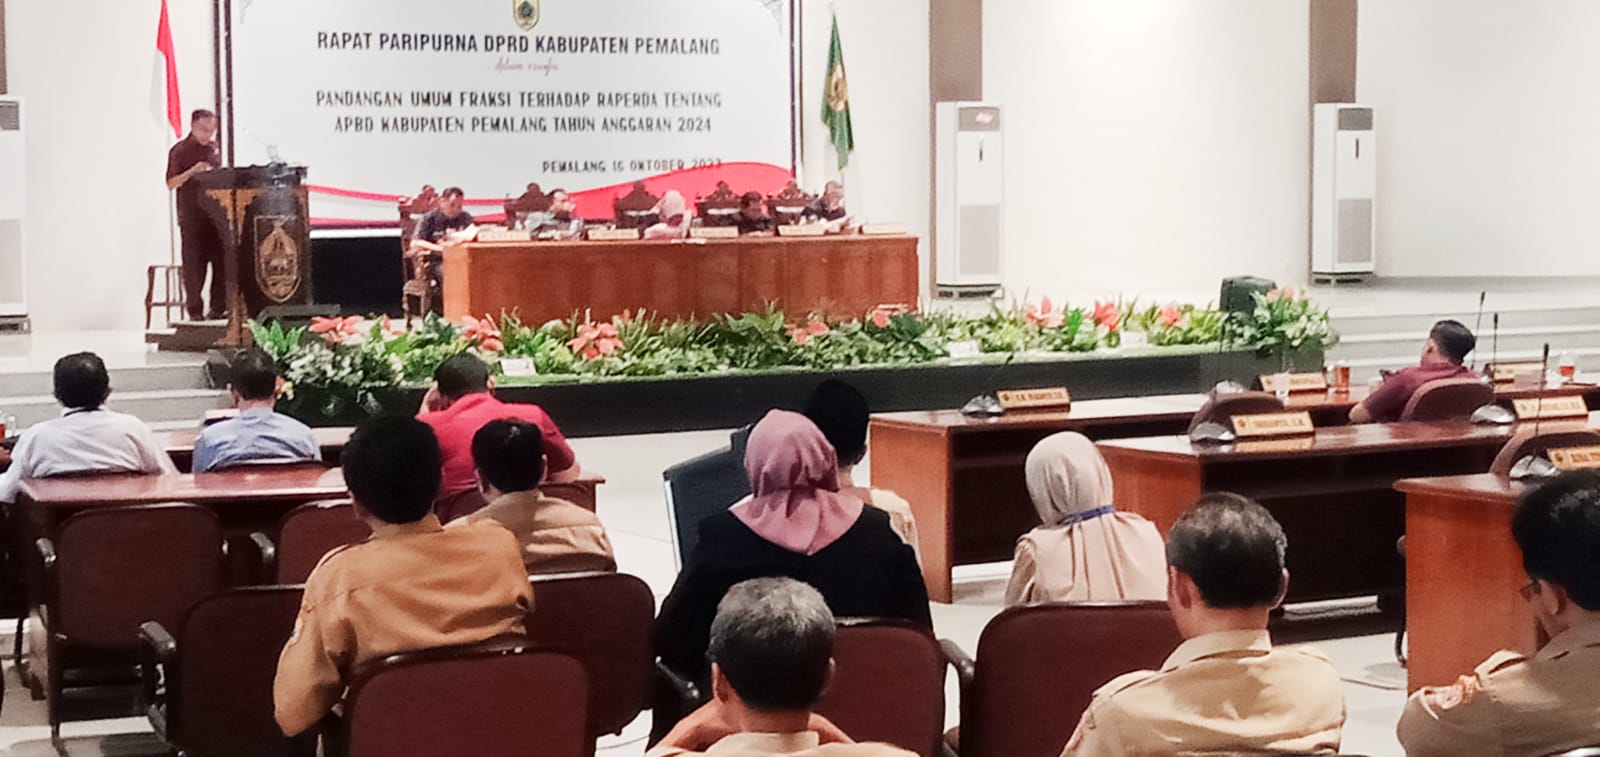 Fraksi-Fraksi DPRD Kabupaten Pemalang Menyampaikan Pandangan Umum 